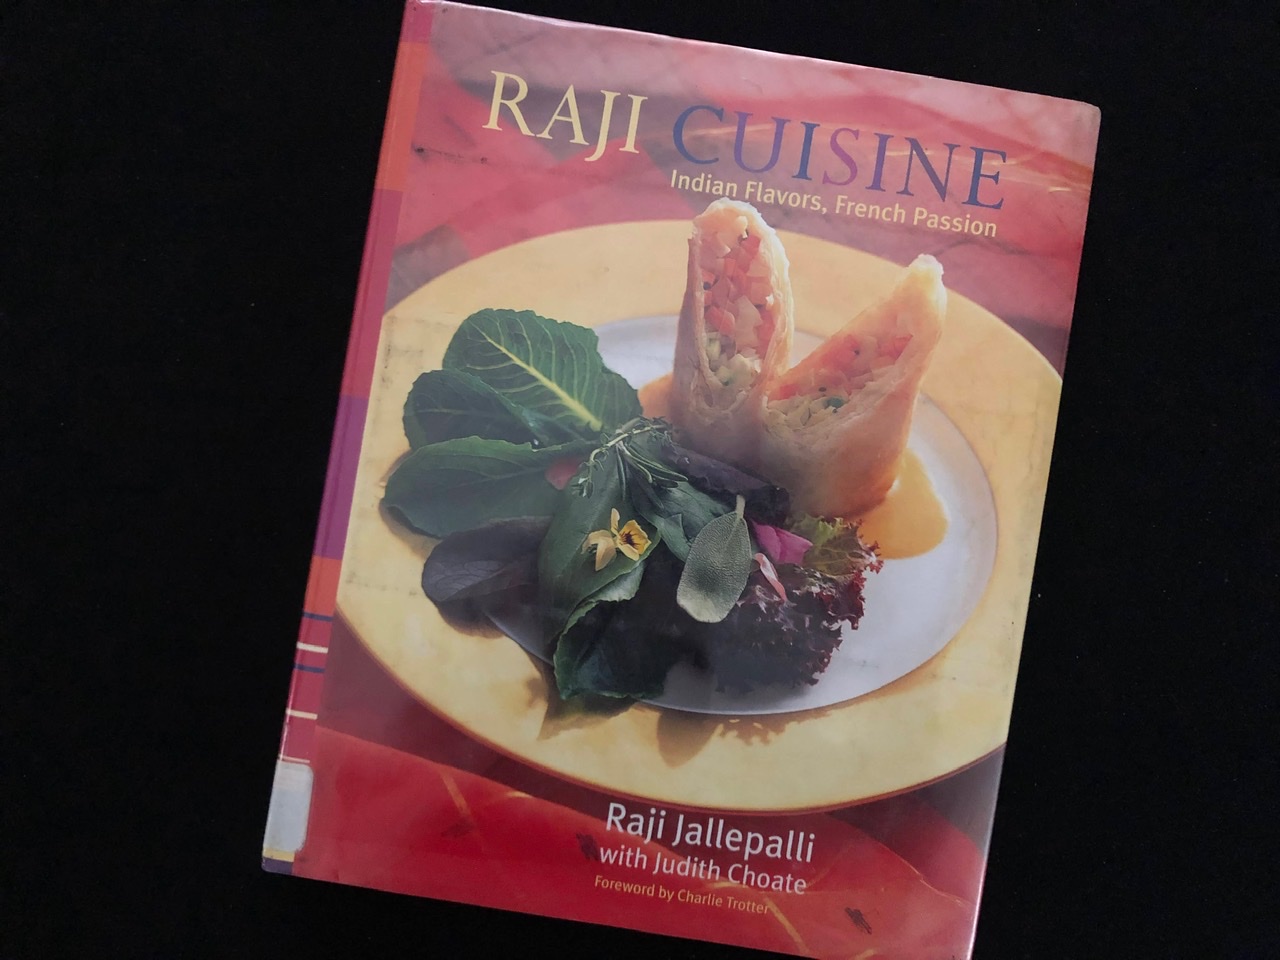 Raji Cuisine cookbook